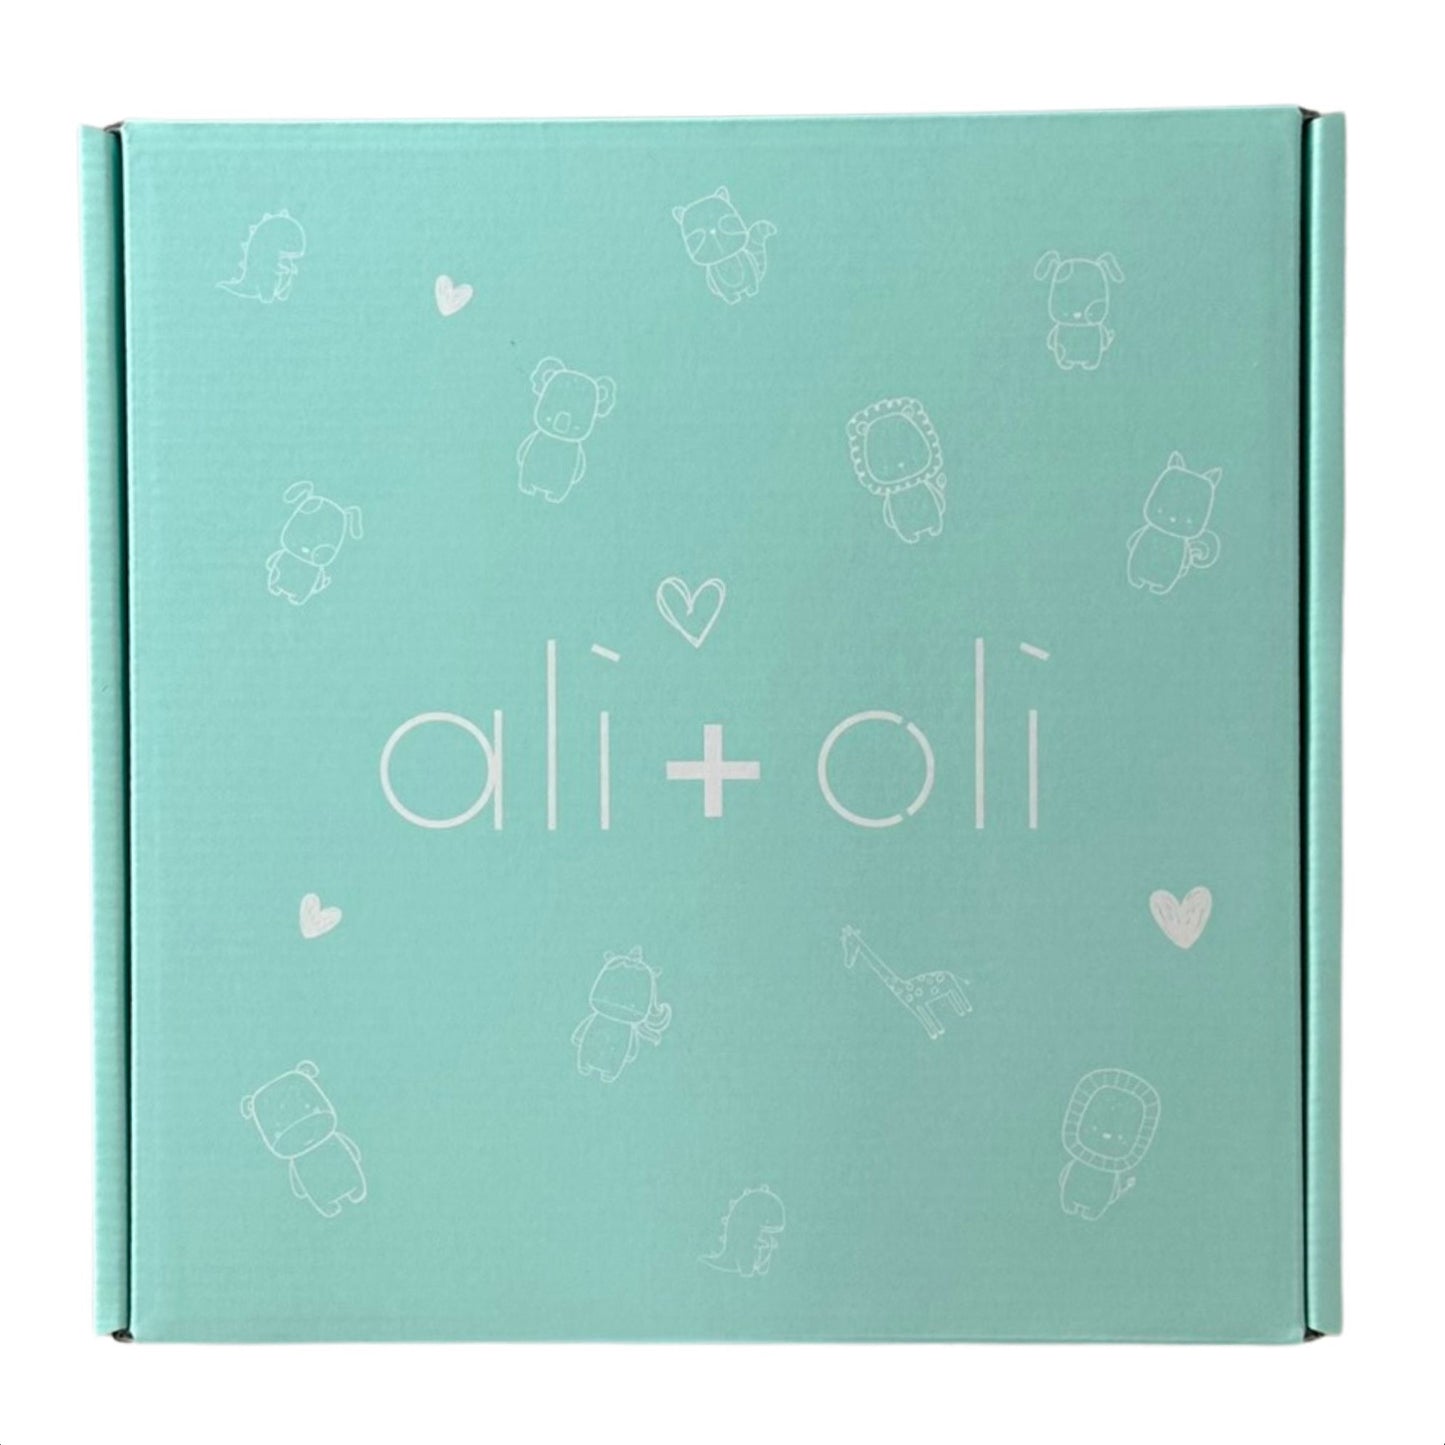 Ali+Oli Baby Gift Box - Rainbow